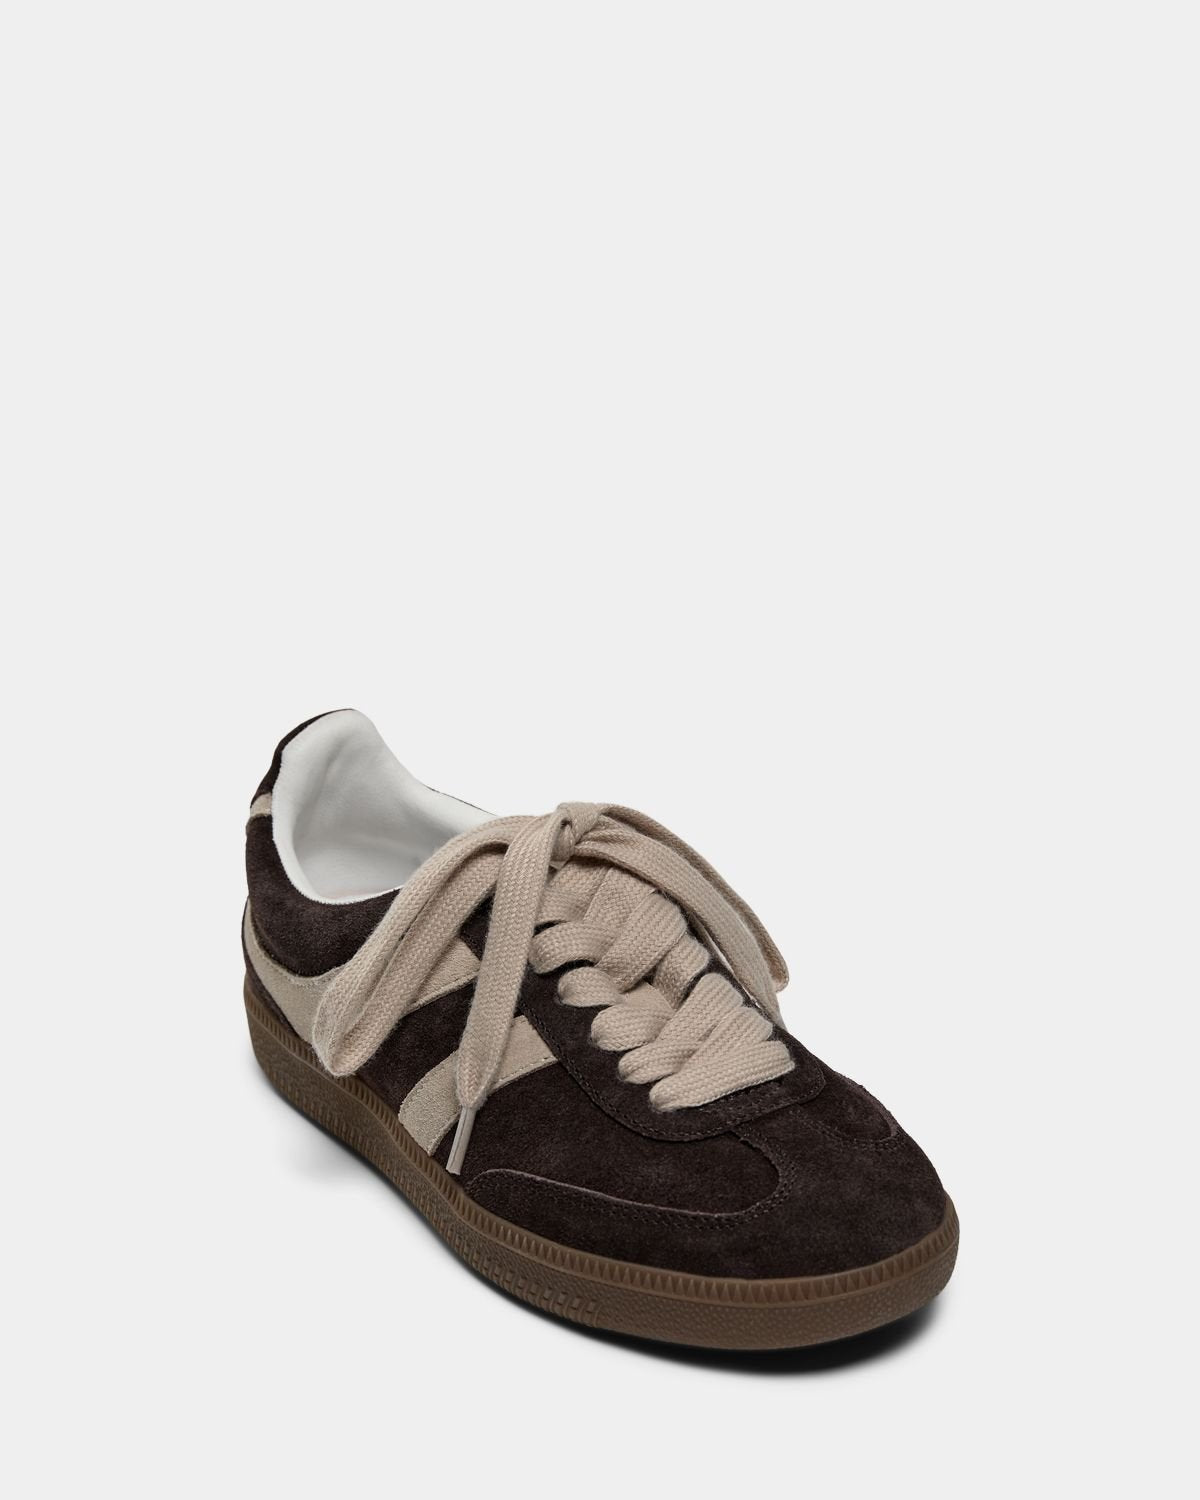 T425-Sneaker-Brown